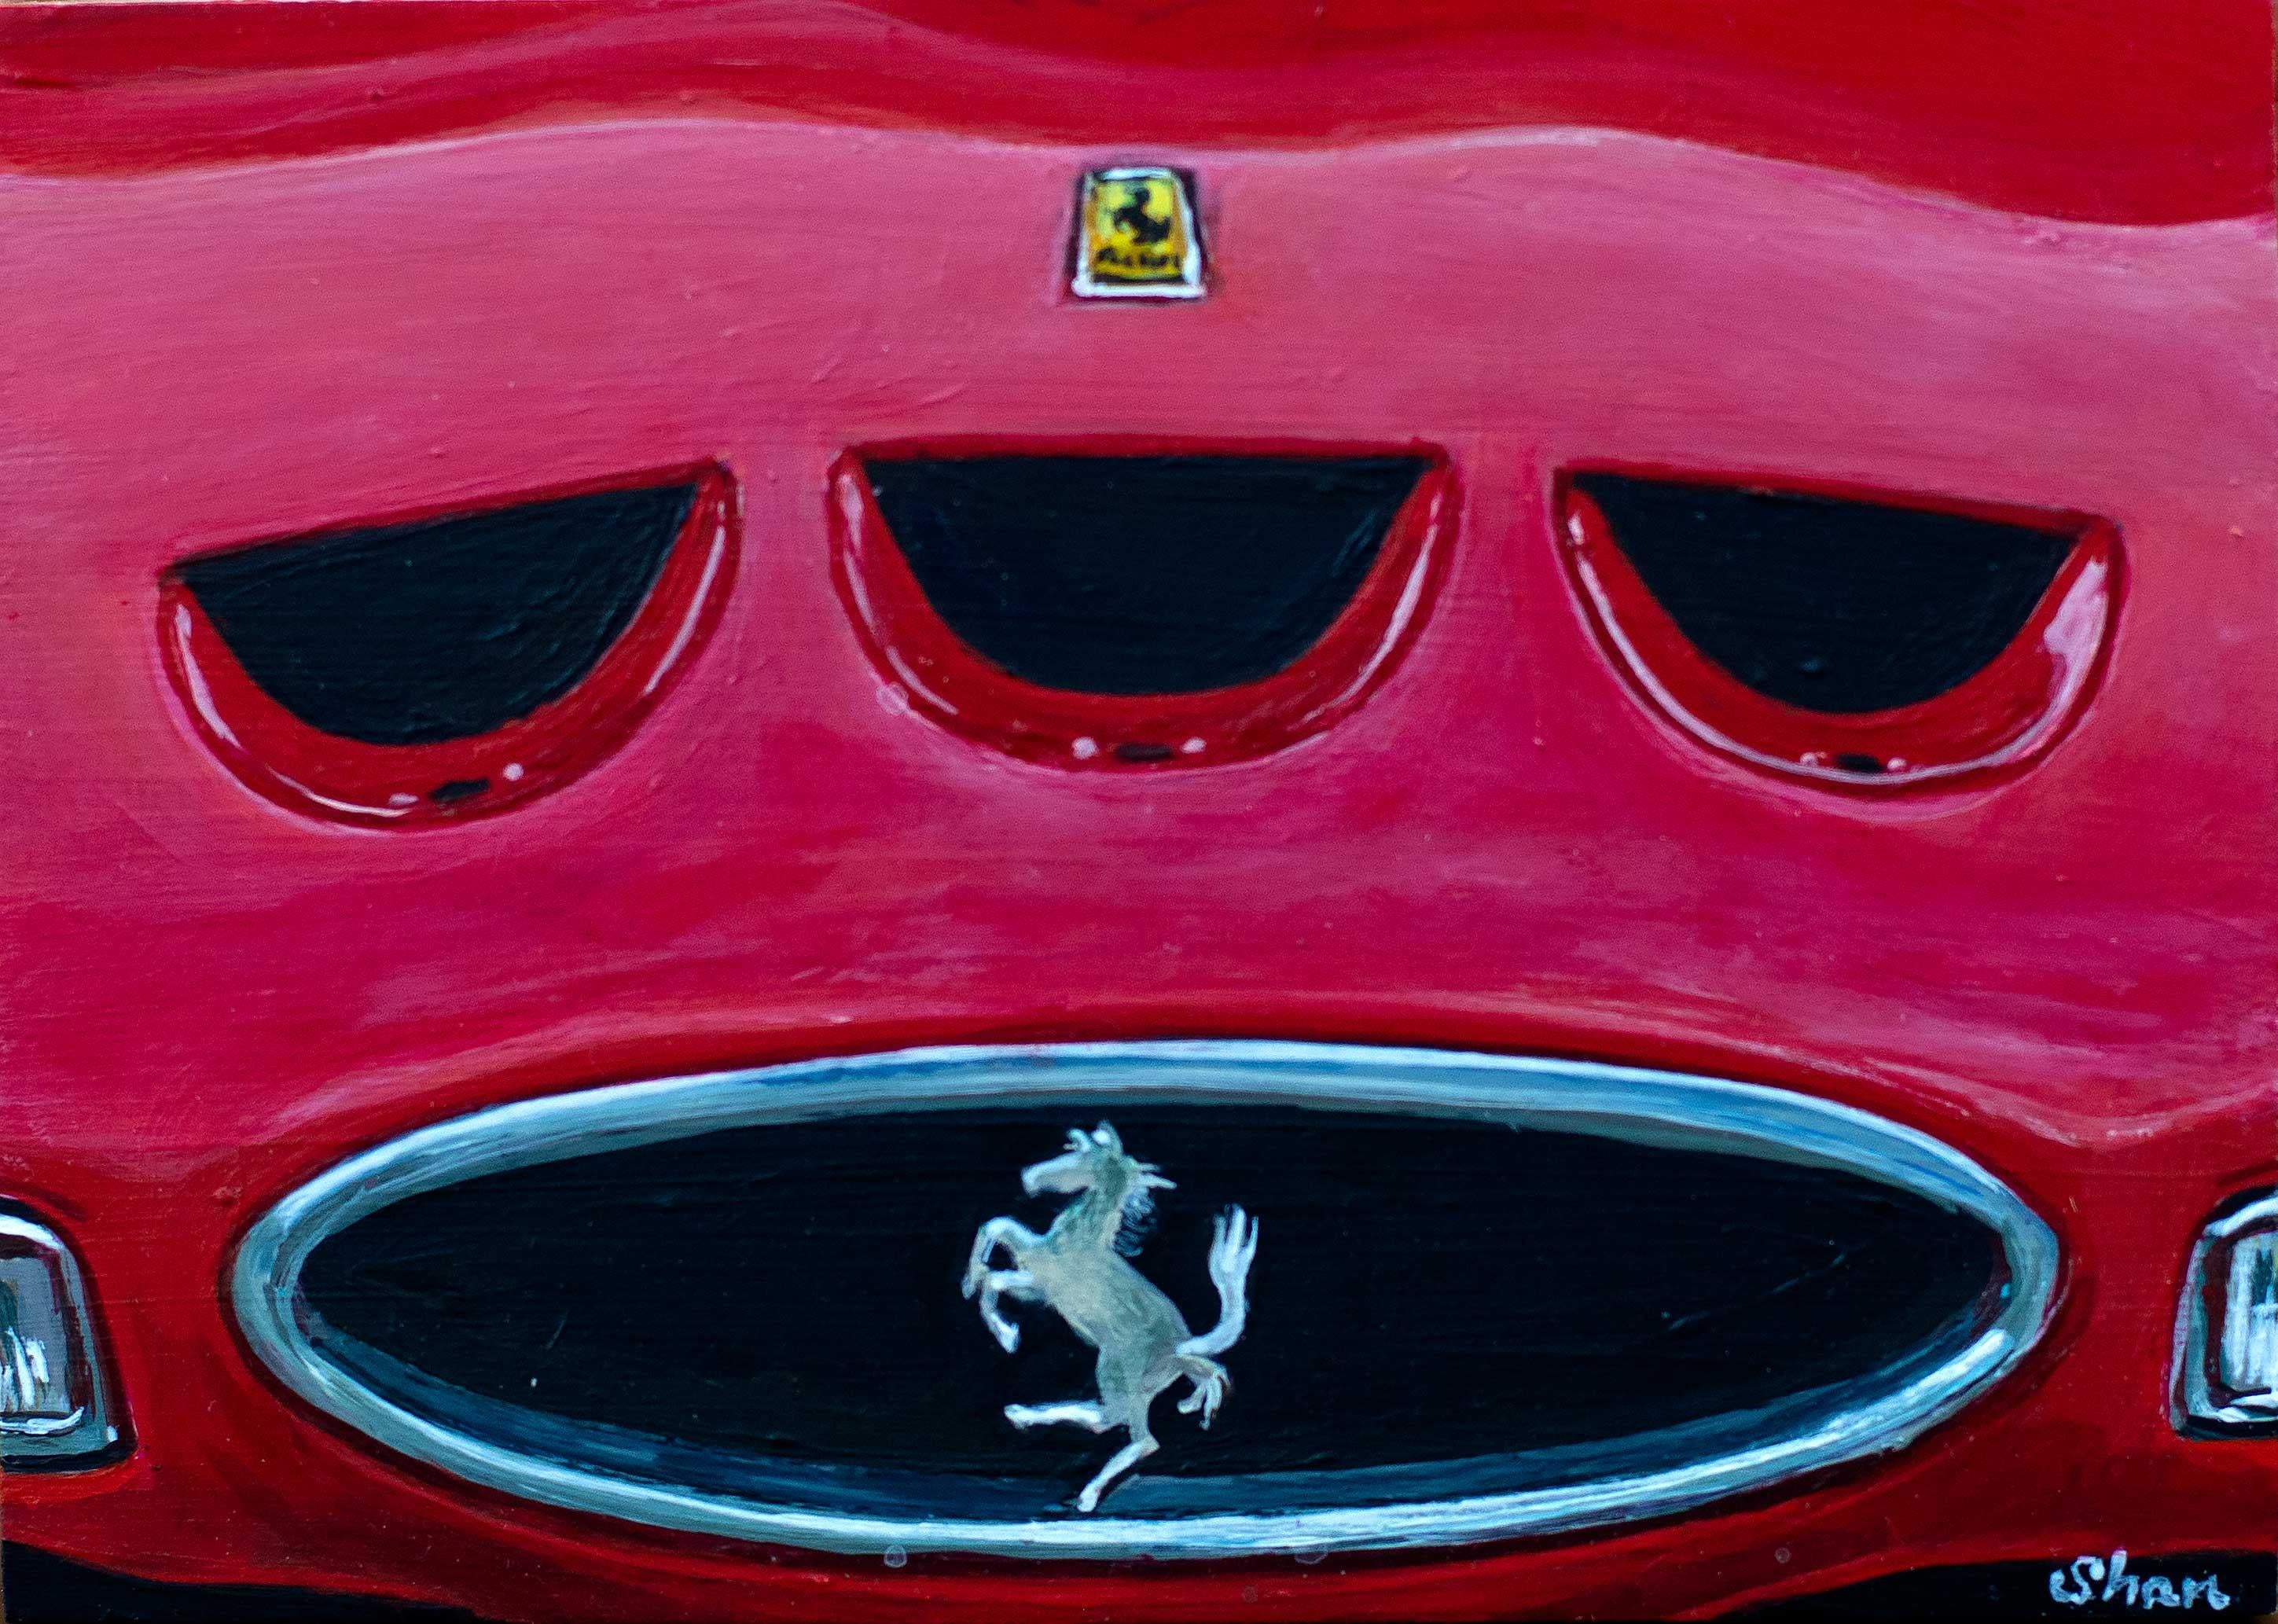 Shan Fannin Figurative Painting - "1962 Ferrari 250 GTO, " Acrylic painting